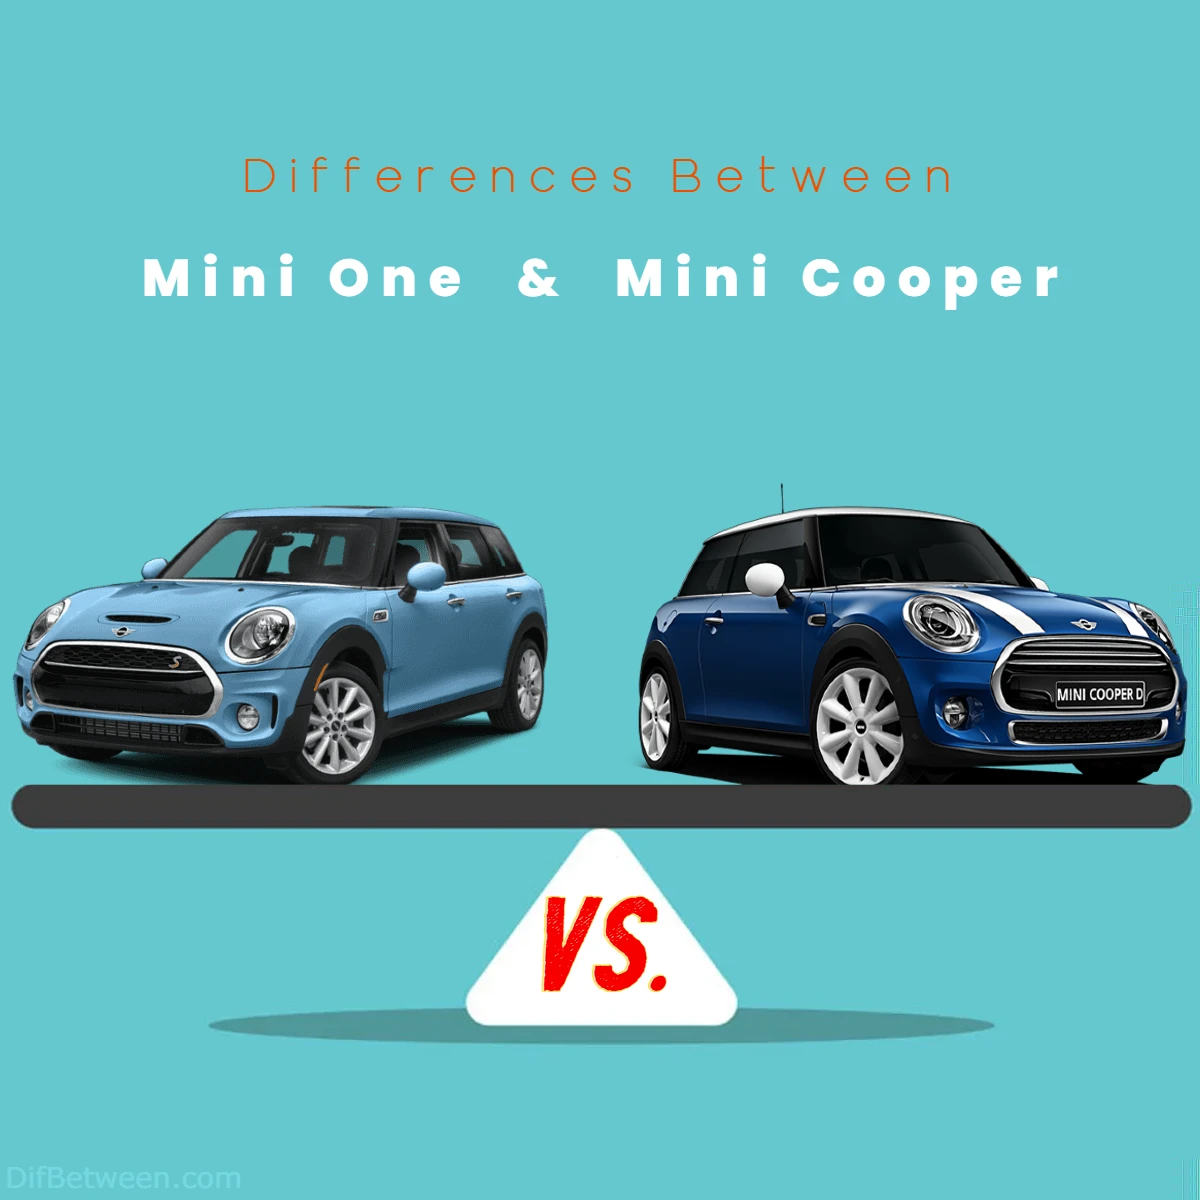 Differences Between Mini One vs Mini Cooper